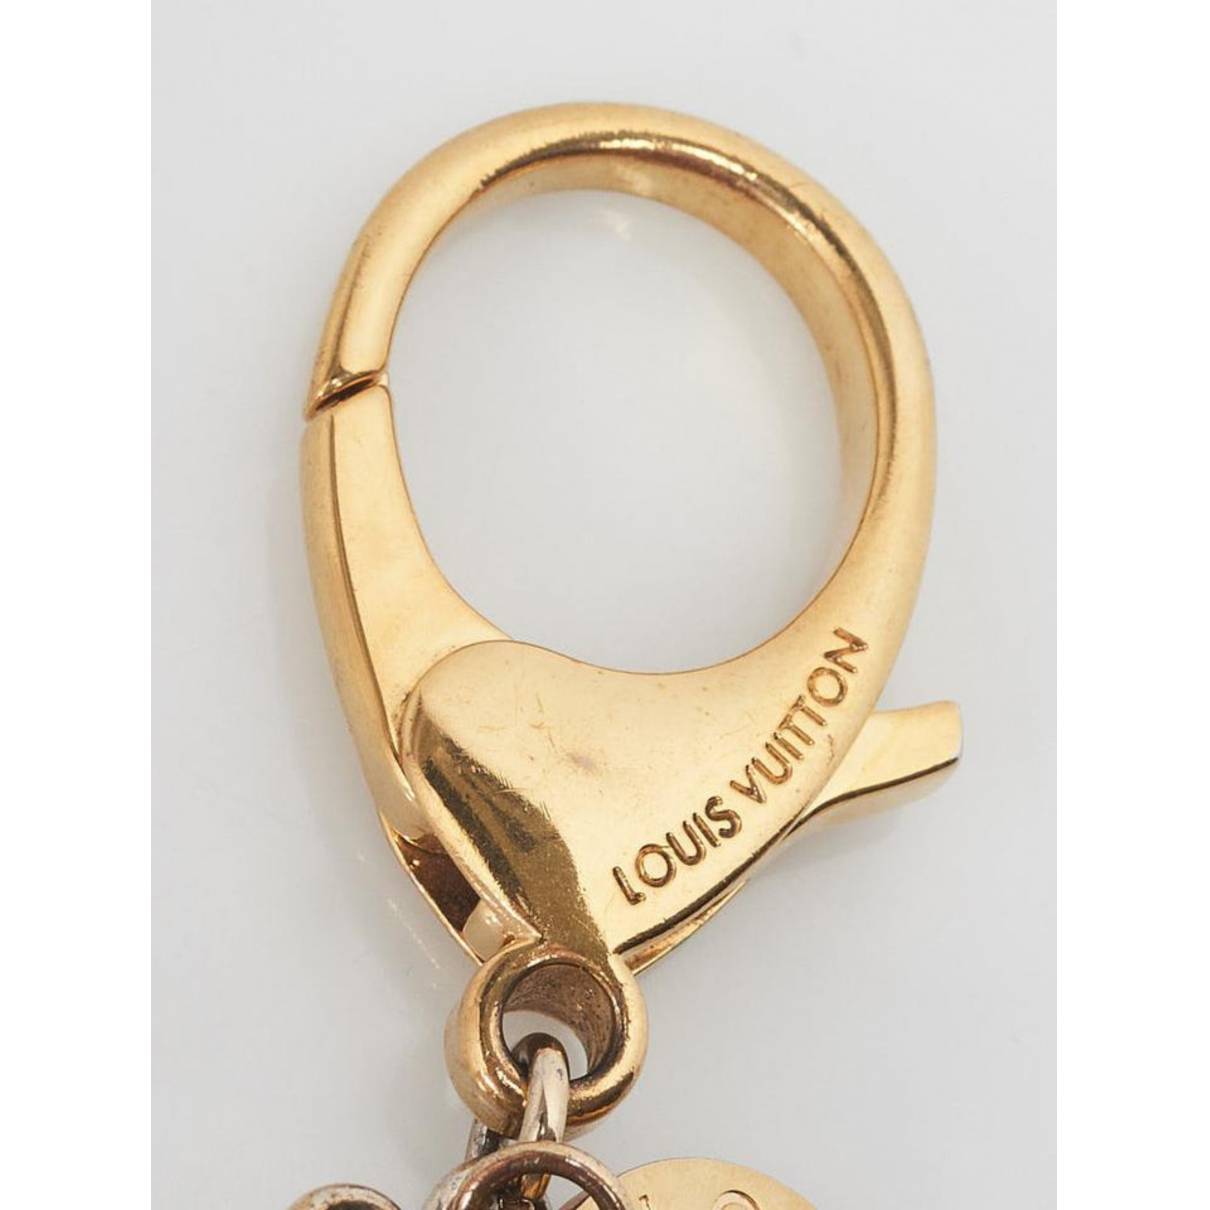 Louis Vuitton Lv nanogram bag charm and key holder (M00362)